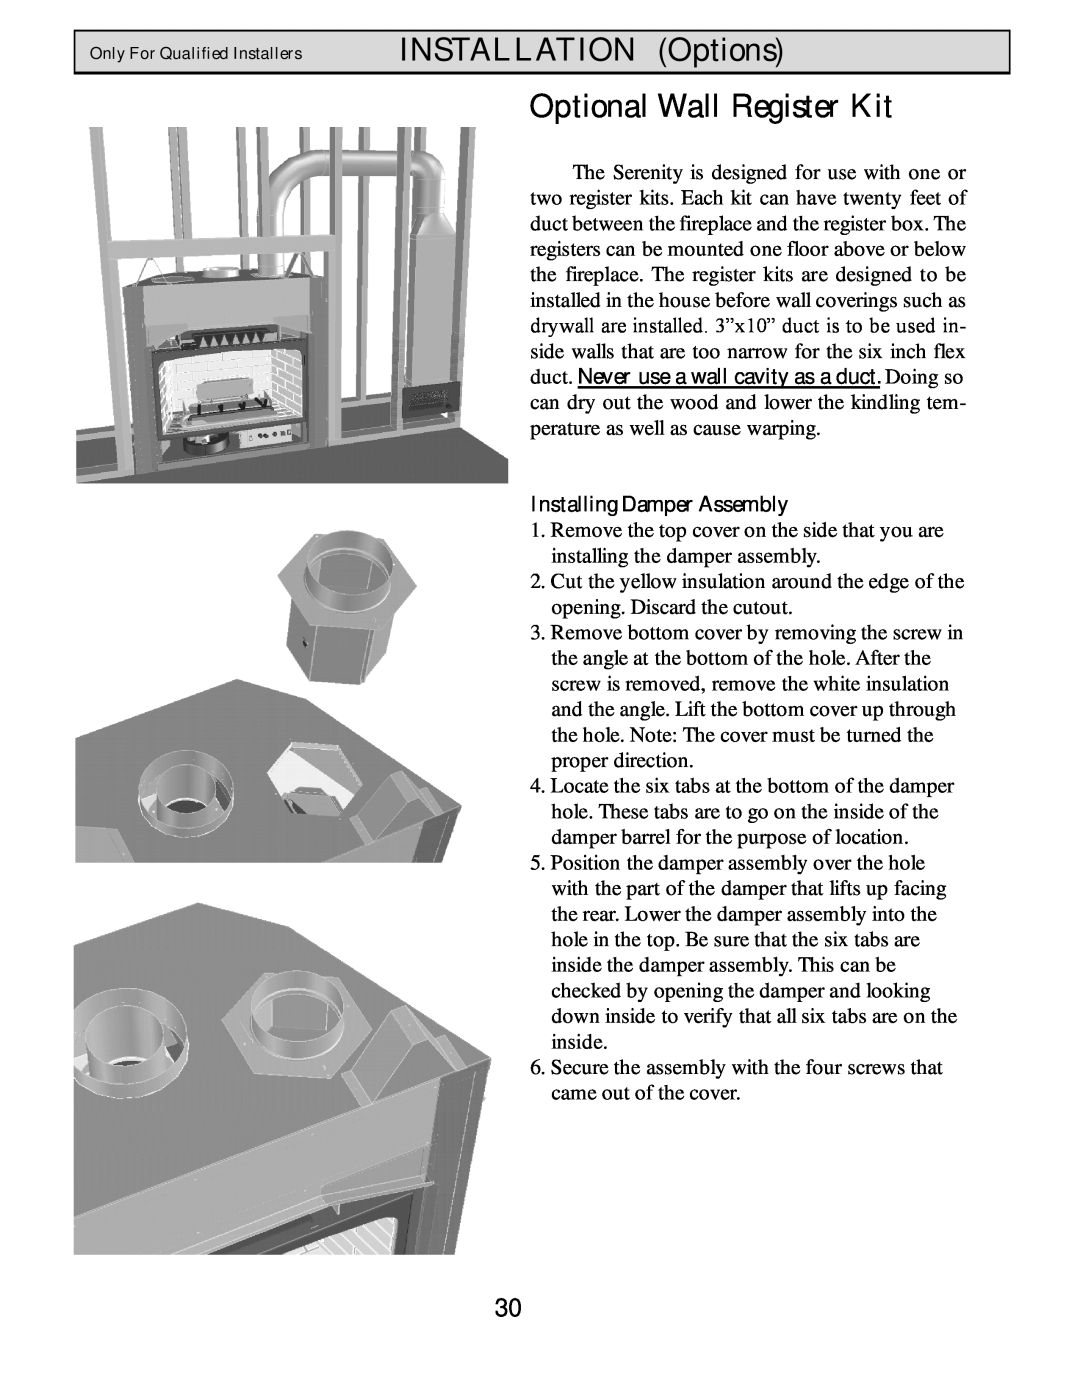 Harman Stove Company HB 38 DV manual Optional Wall Register Kit, Installing Damper Assembly, INSTALLATION Options 